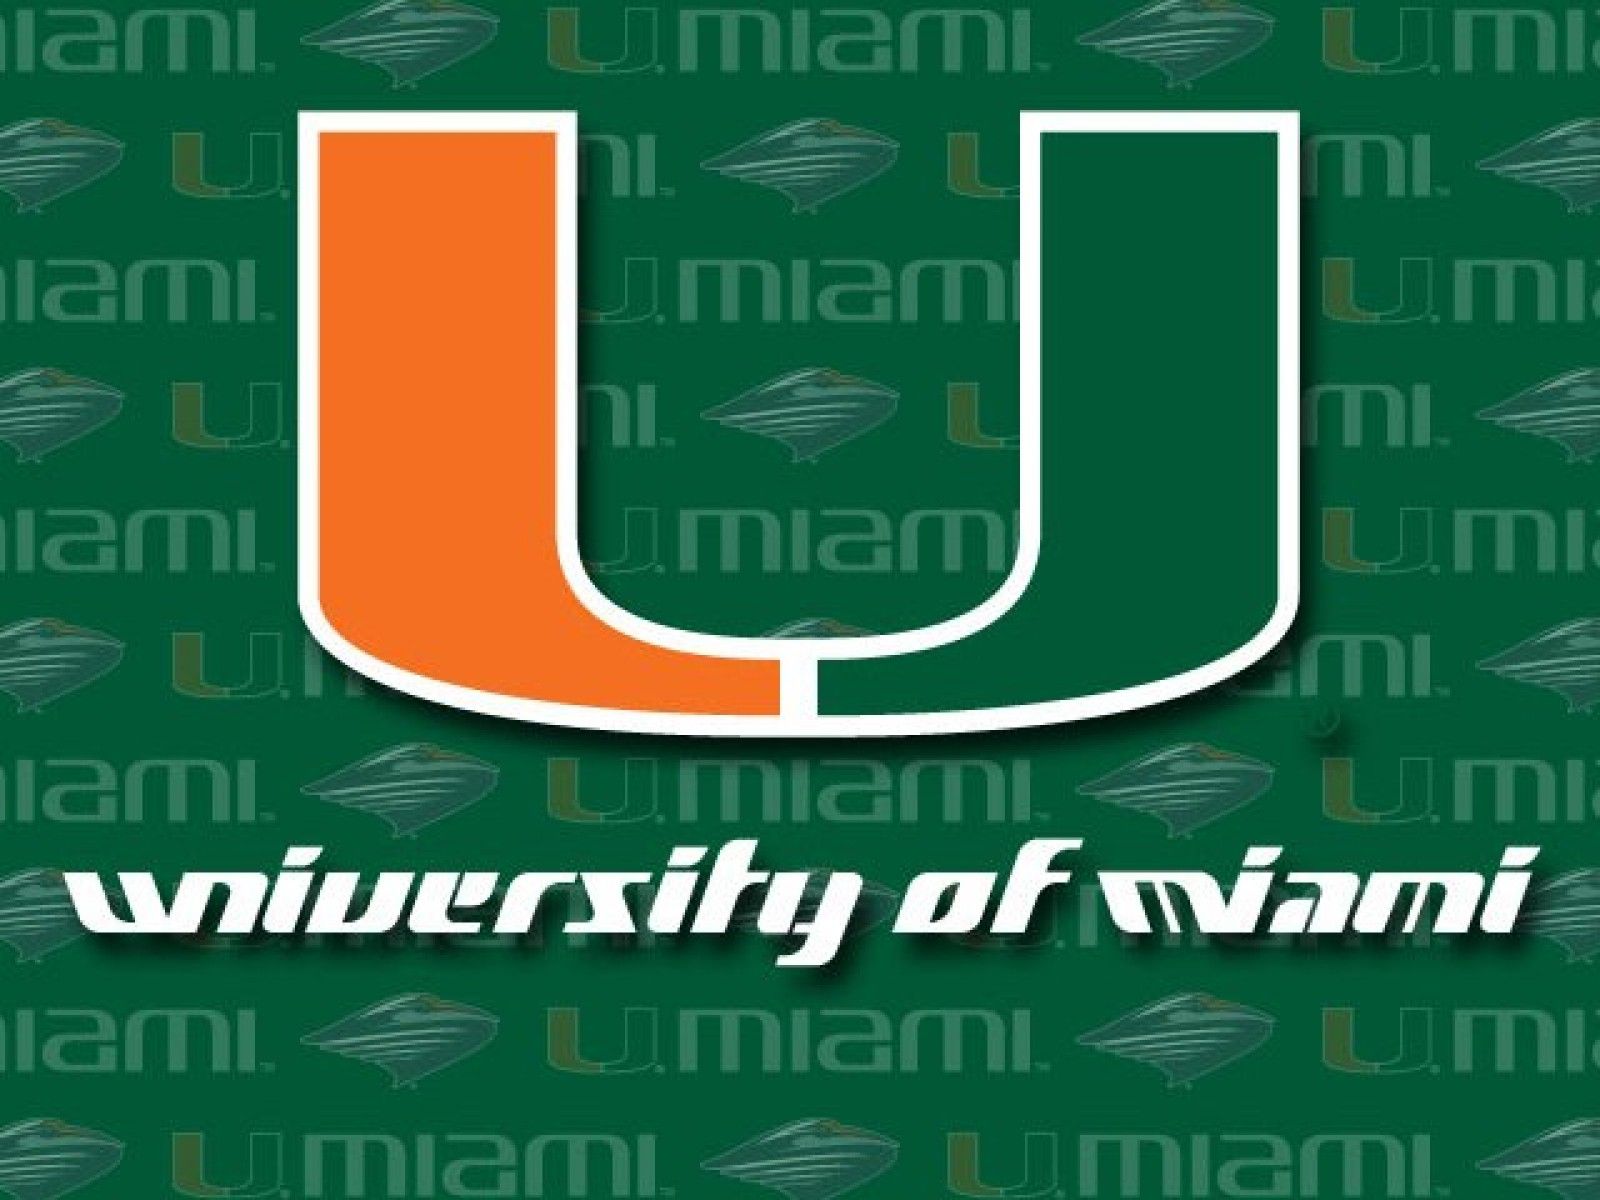 University Of Miami Wallpaper